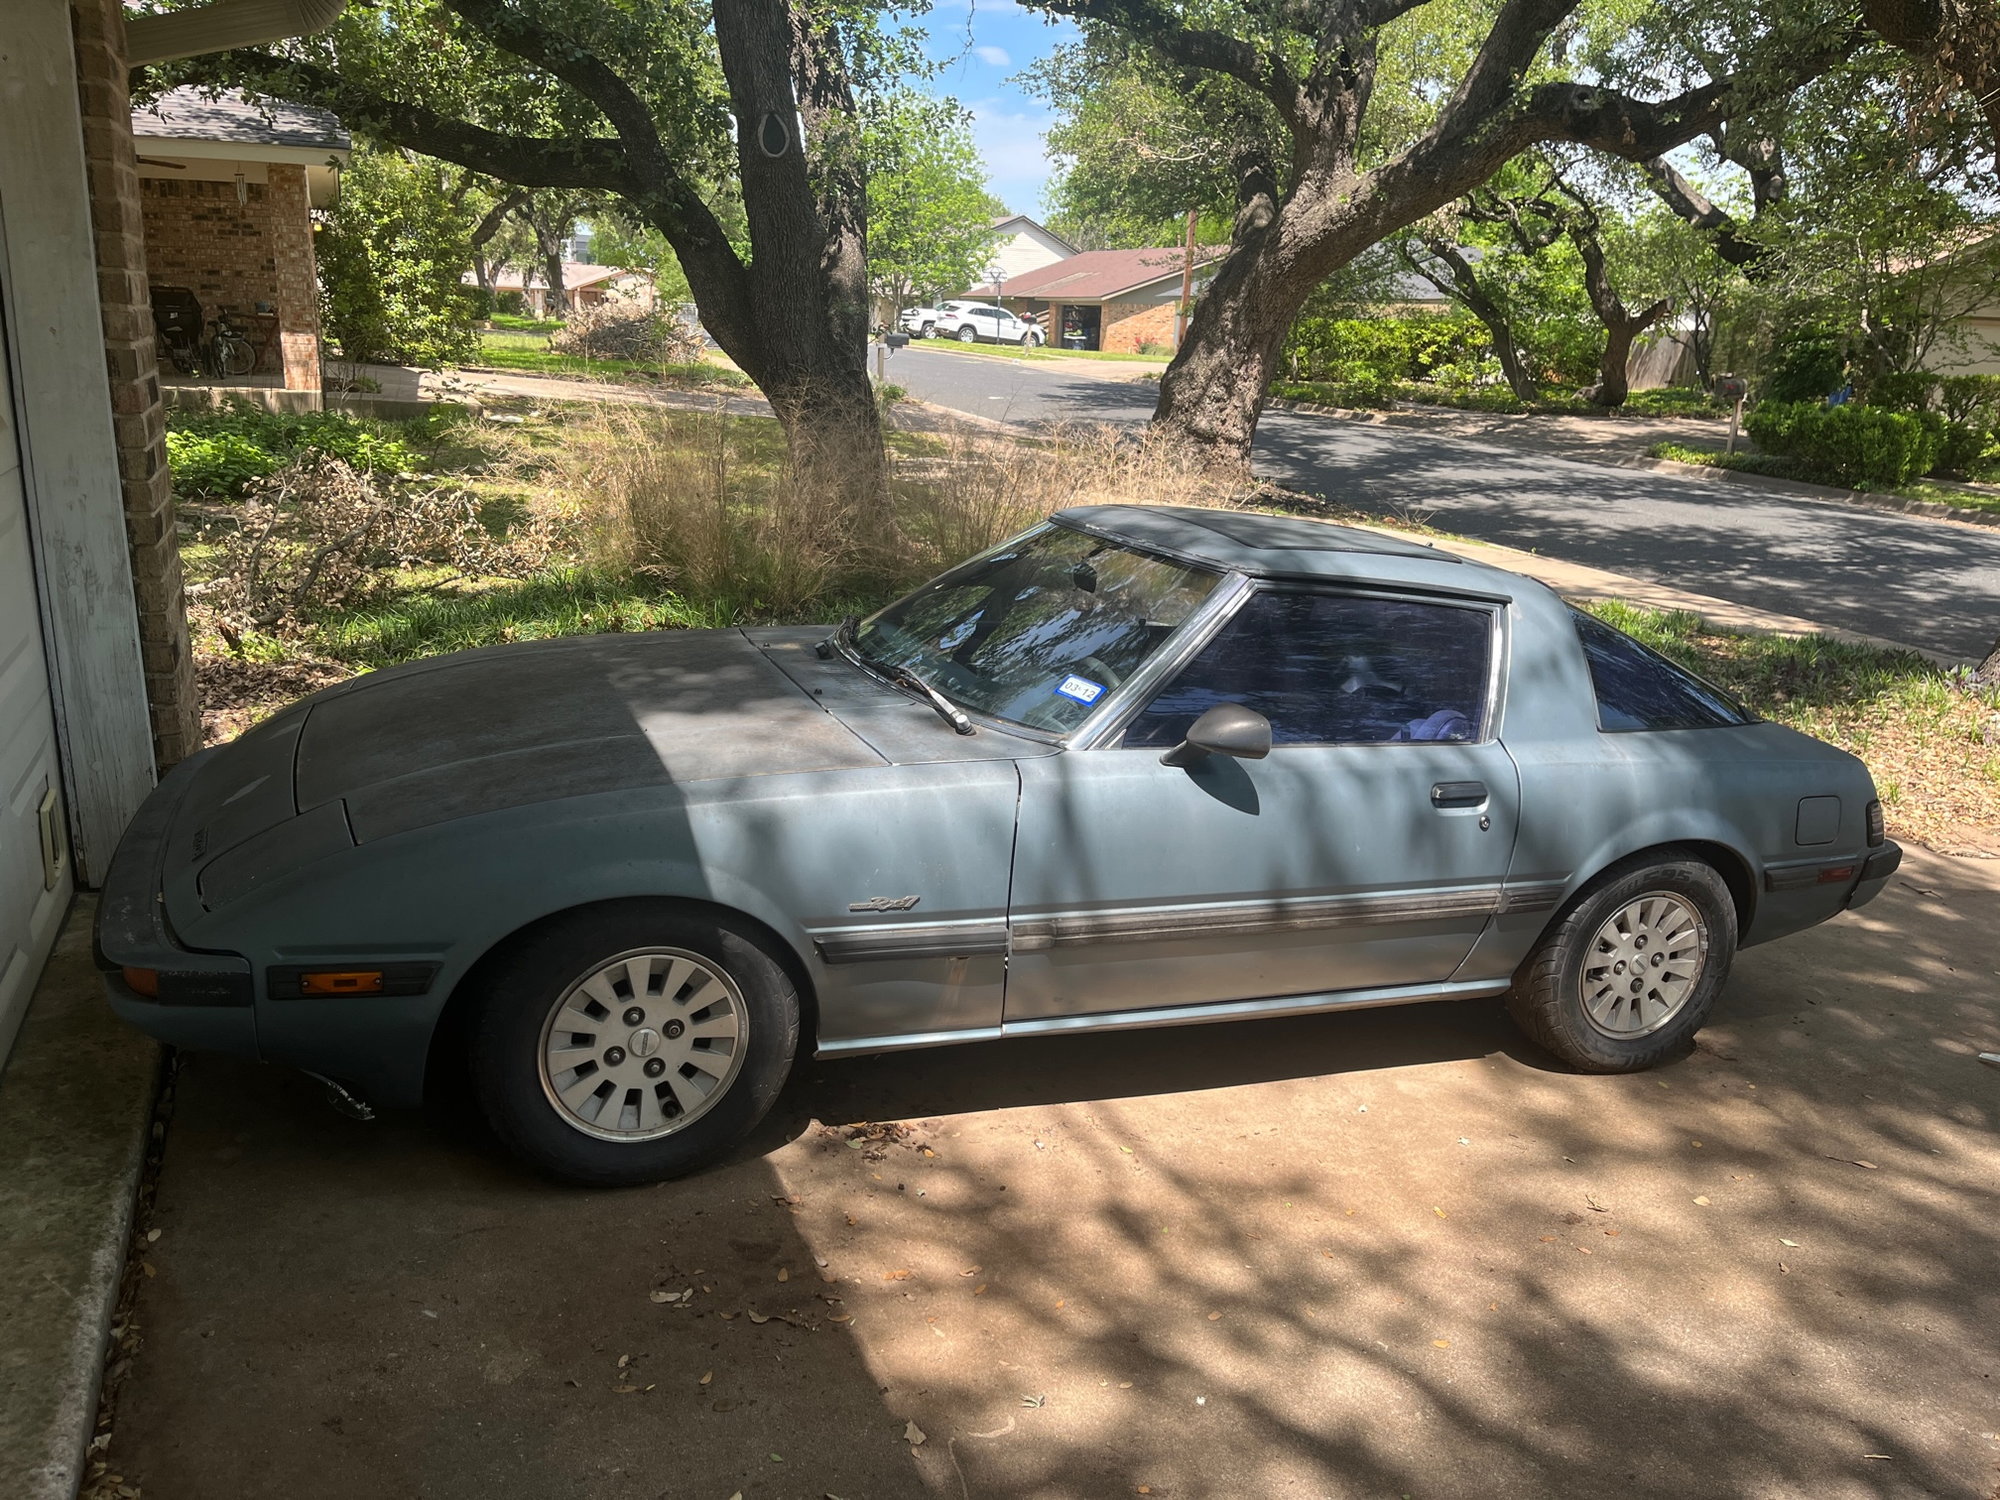 1985 Mazda RX-7 - Selling my 1985 GSL-SE Tender Blue, 161K $3500 (Austin,TX) - Used - Austin, TX 78749, United States